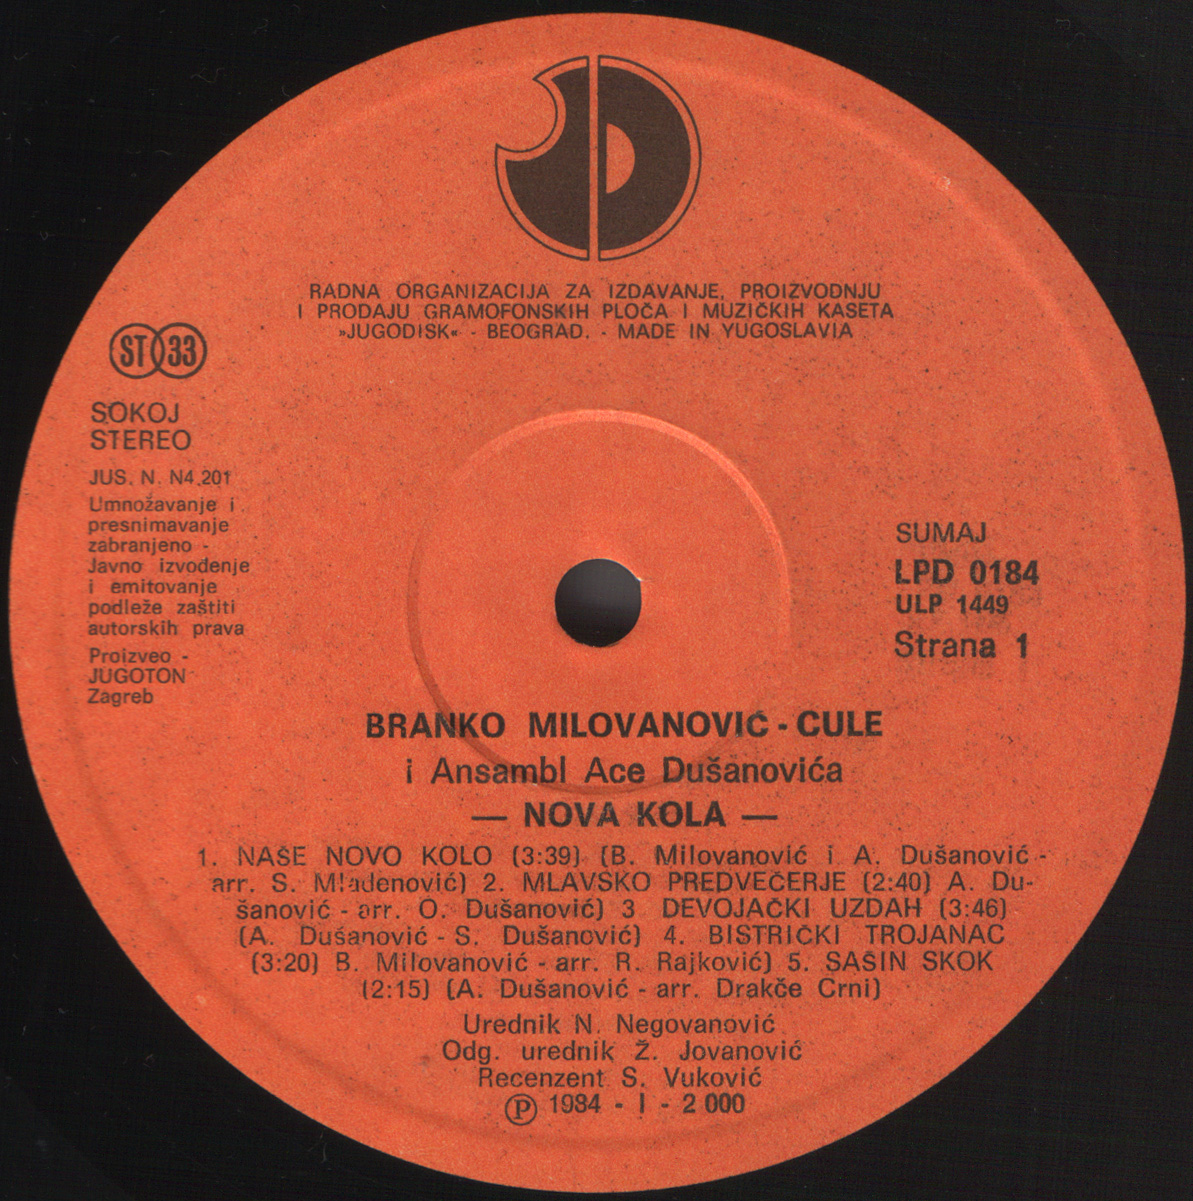 Branko Milovanovic Cule 1984 A